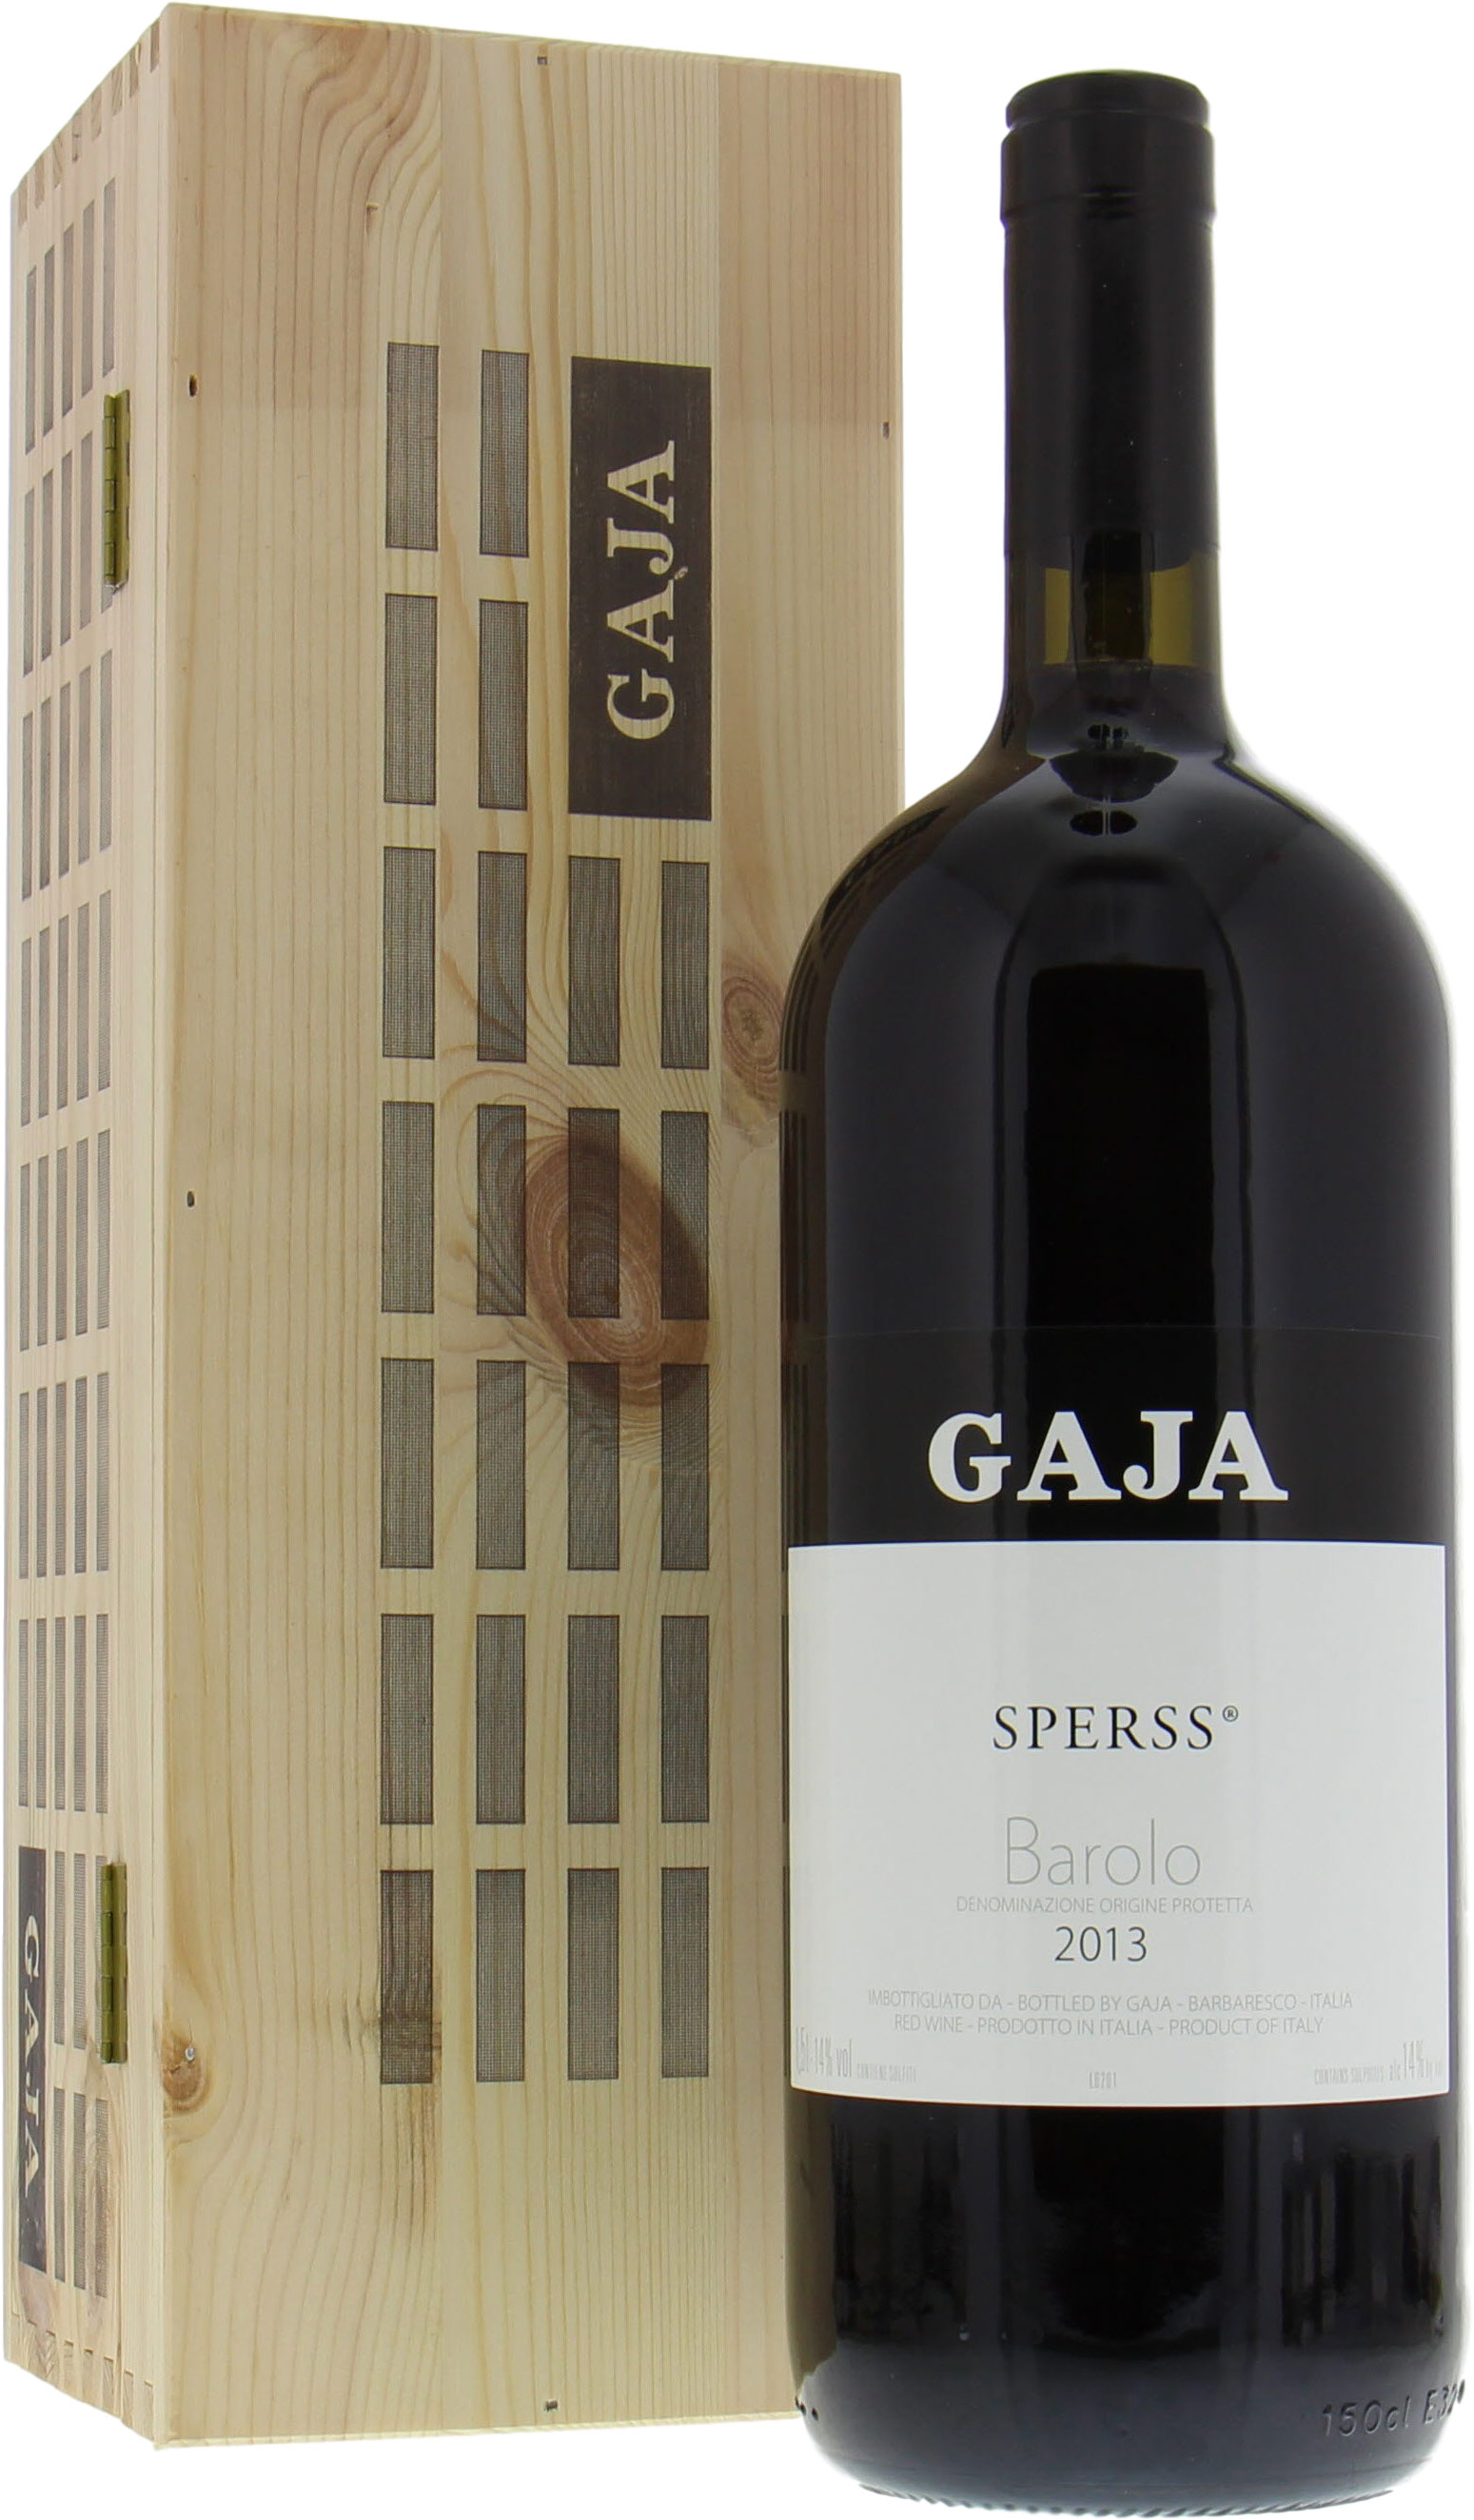 Gaja - Sperss Barolo 2013 From Original Wooden Case